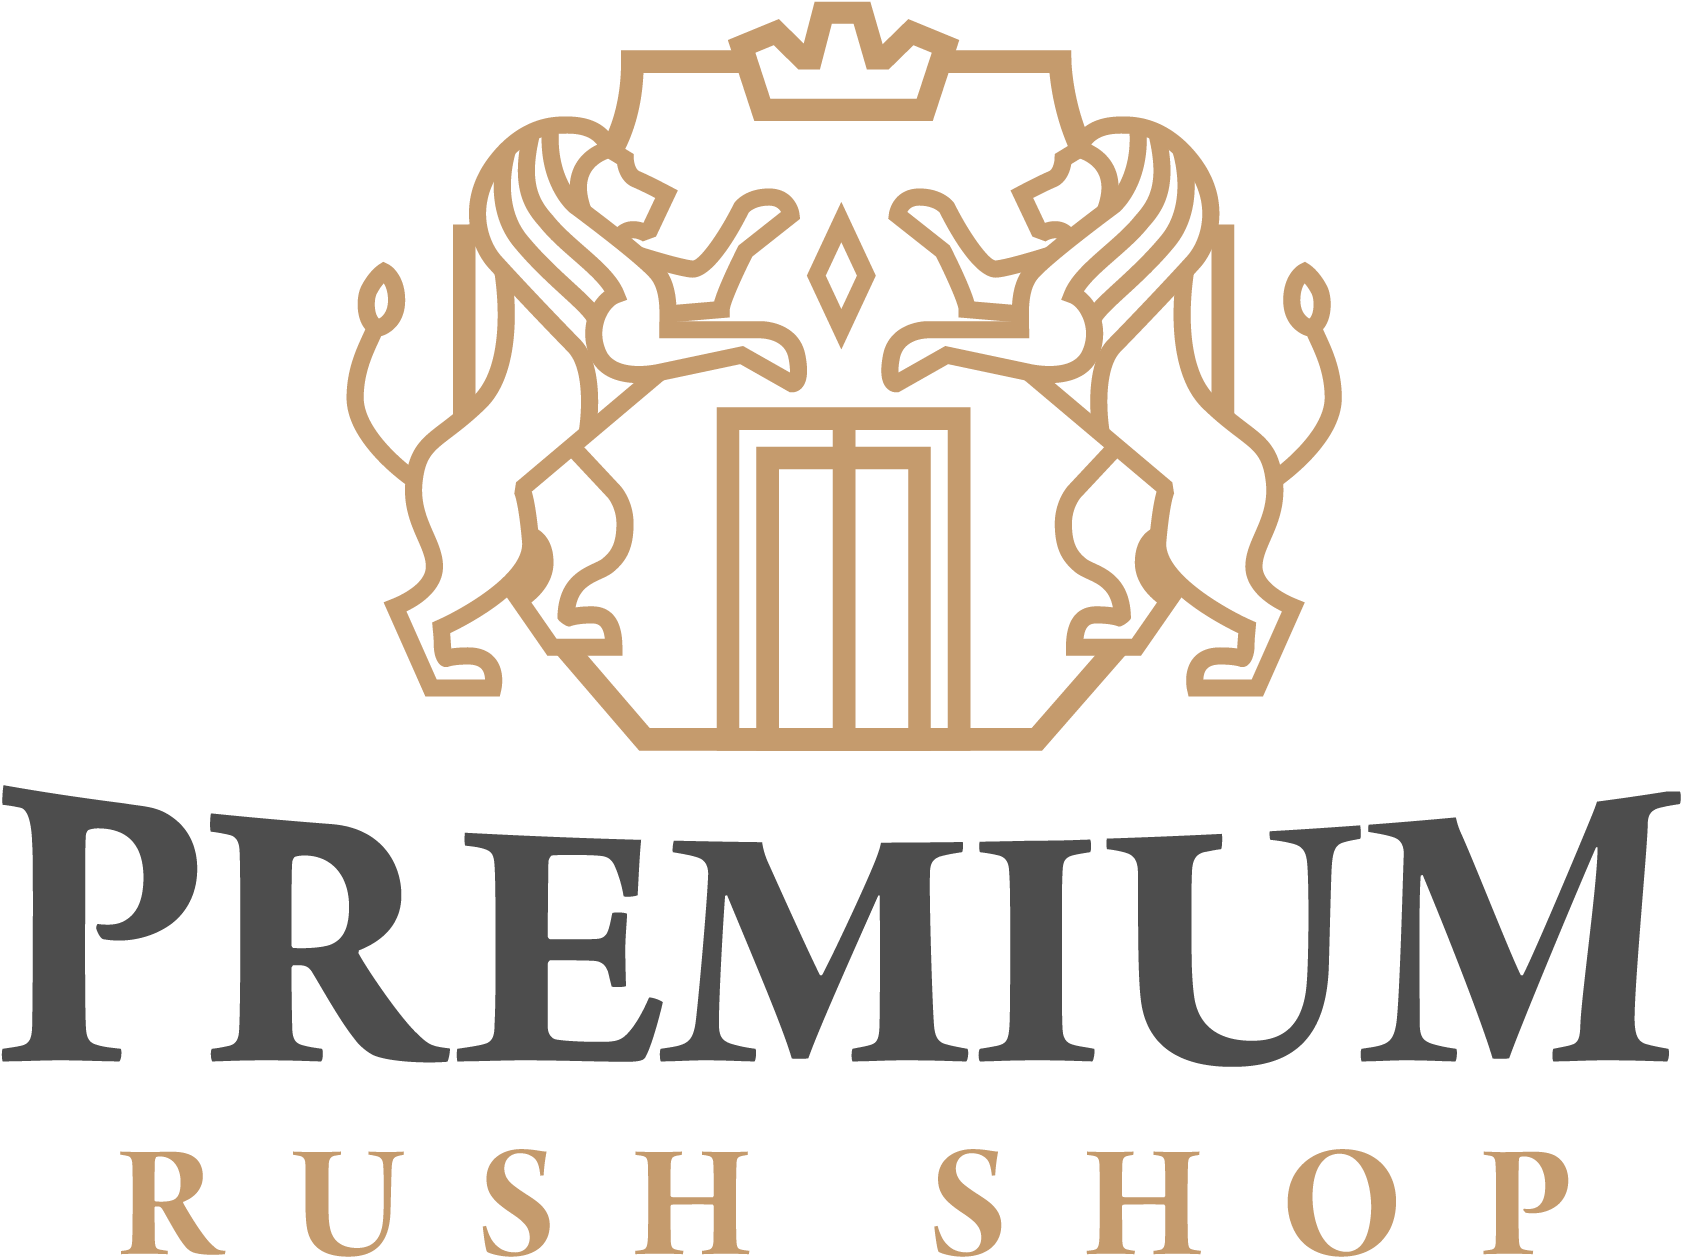 Premium Rush Shop Logo PNG image